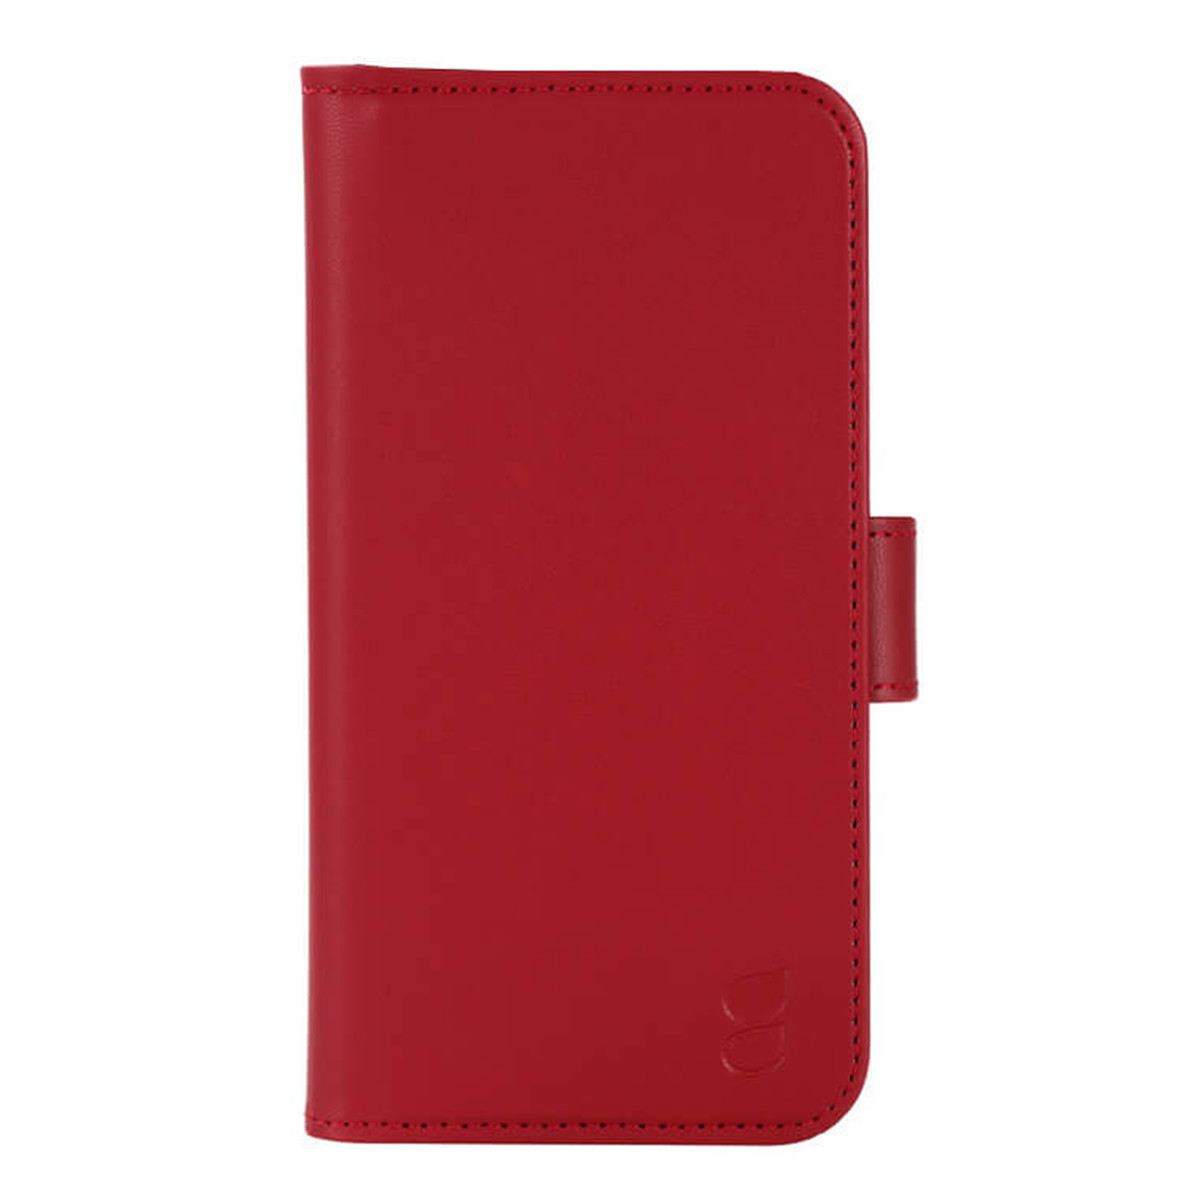 GEAR Mobilfodral Limited Edition, iPhone 12/12 Pro, röd